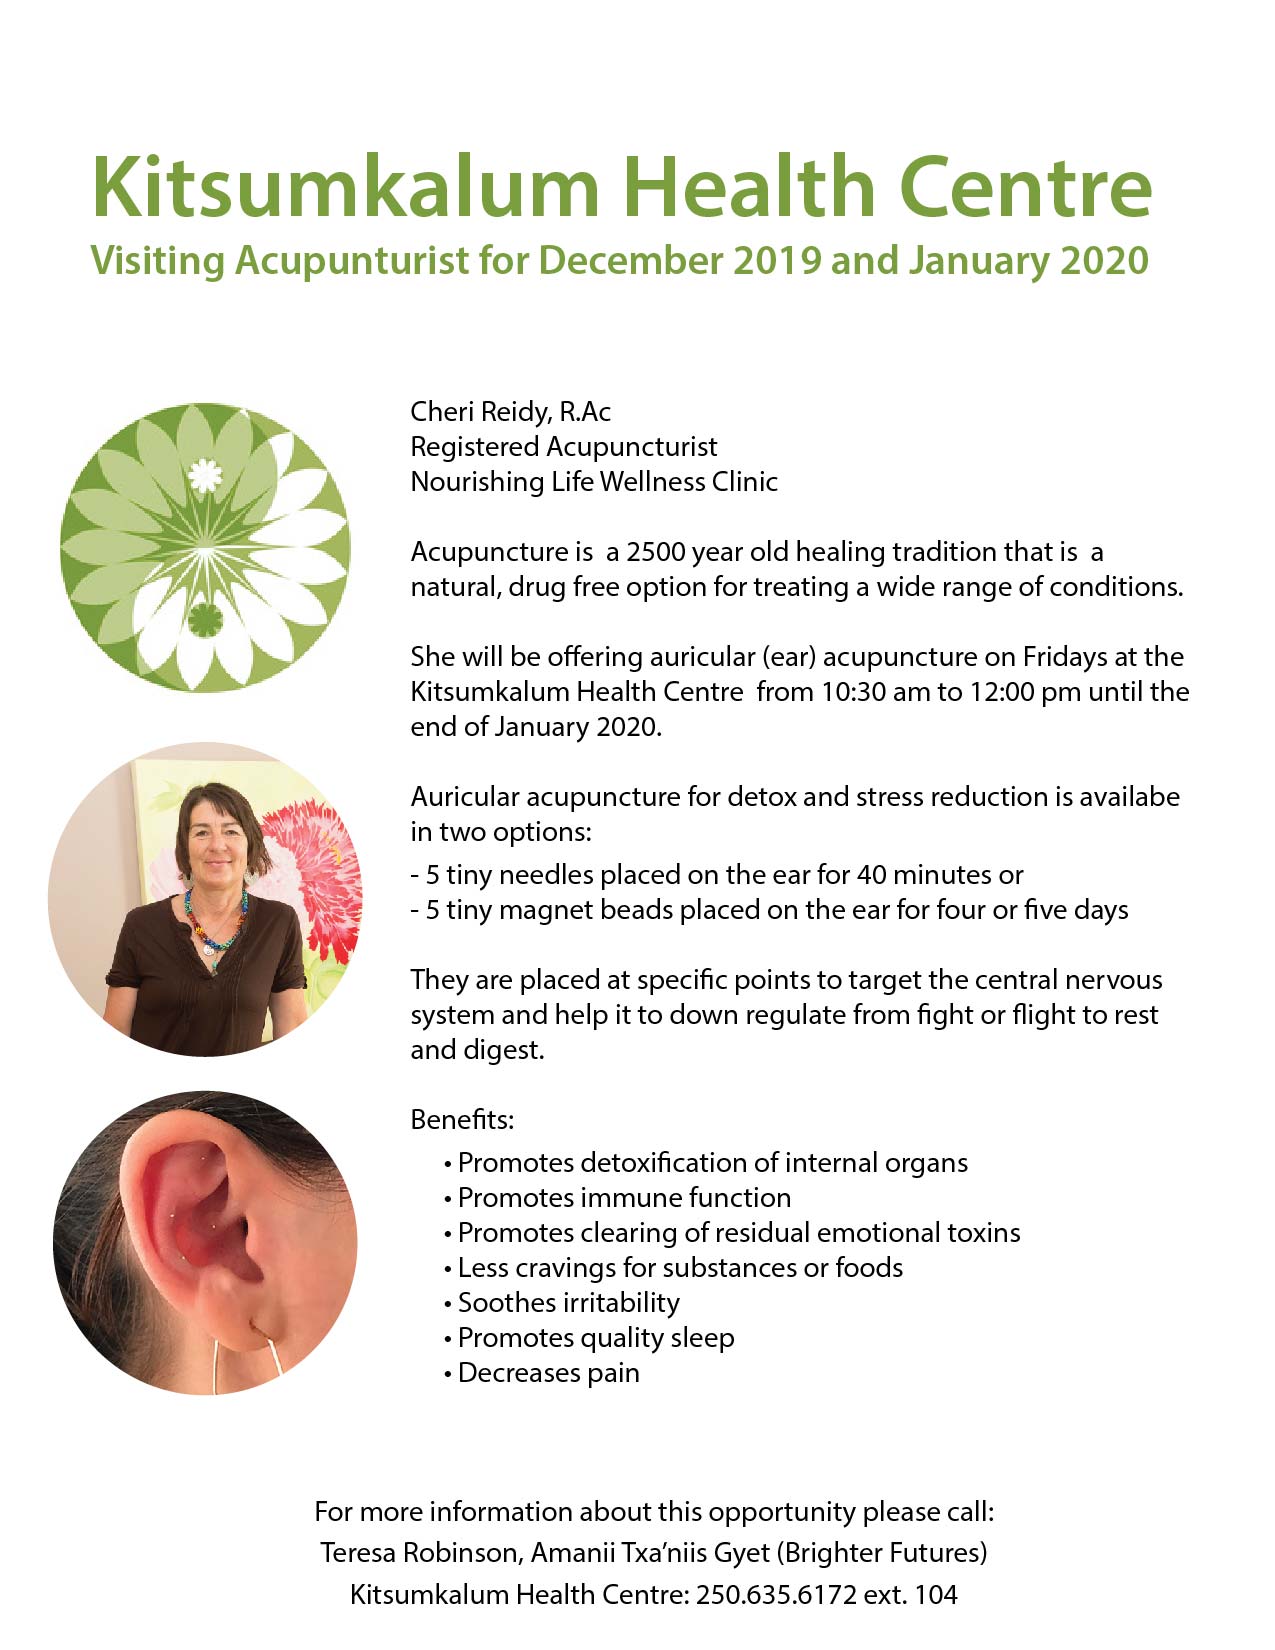 Visiting Acupuncturist at Kitsumkalum Health